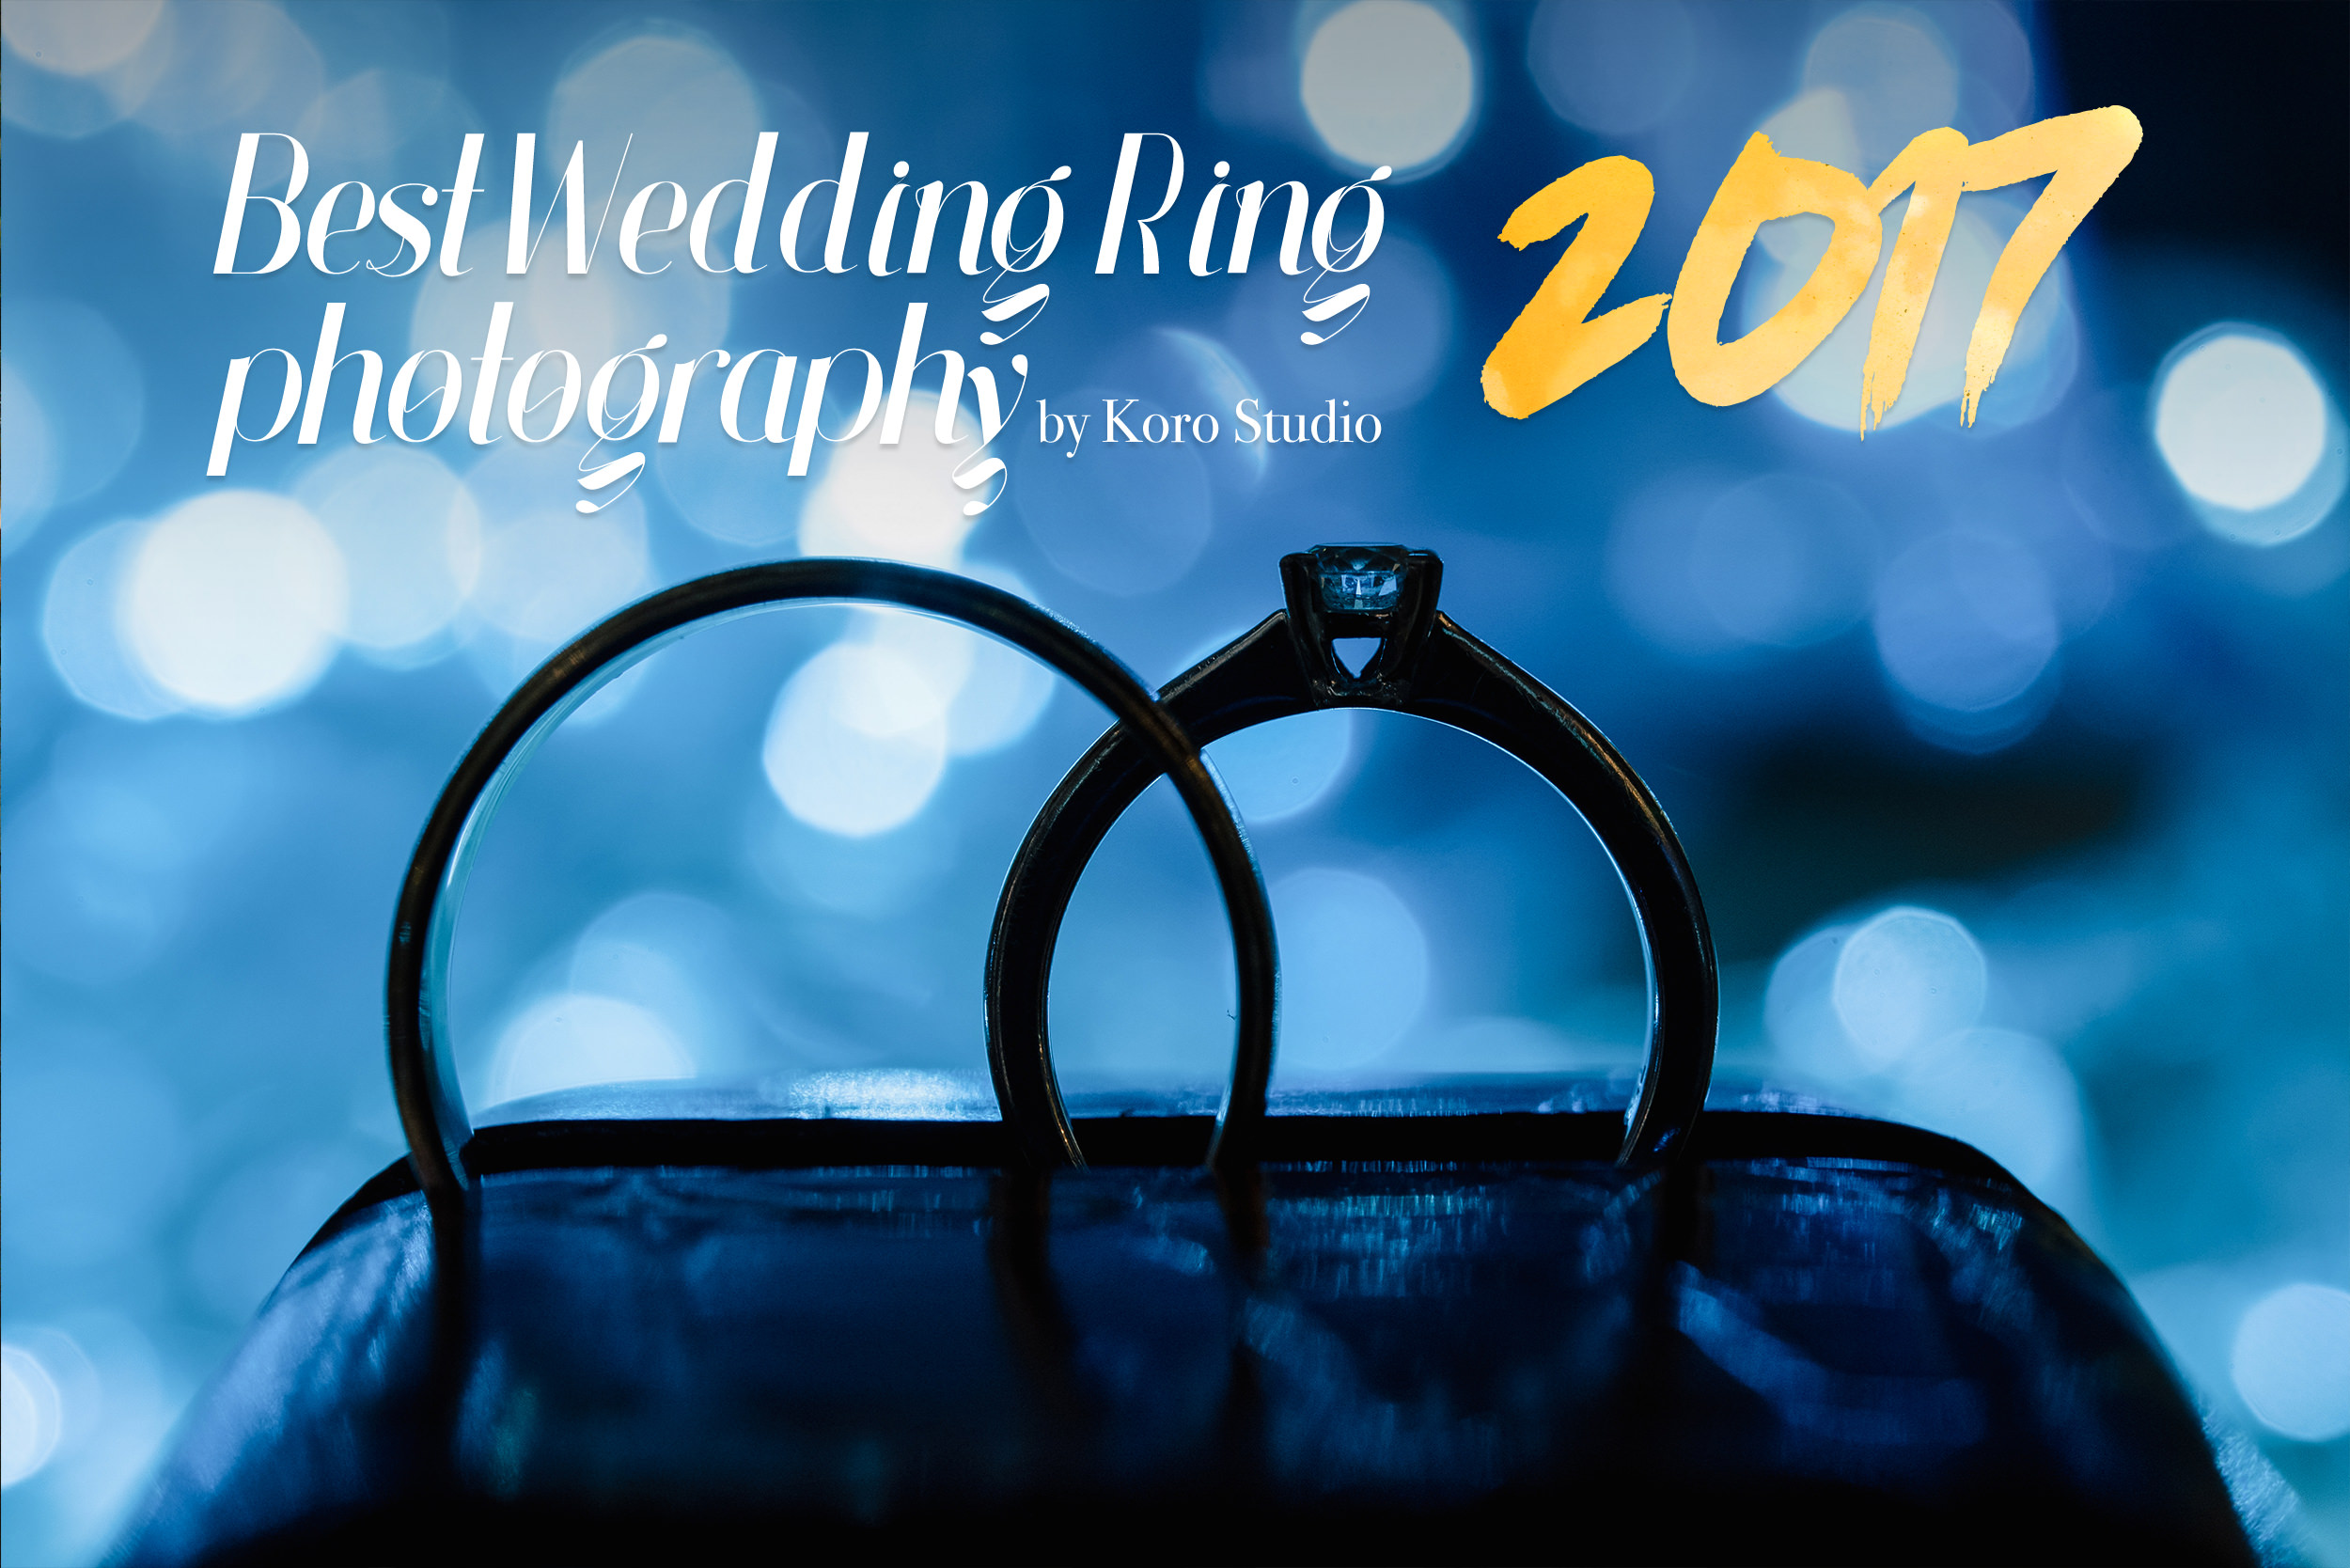 korostudio best wedding engagement ring photography in 2017 cover 1 Best Wedding Engagement Ring Photography in 2017